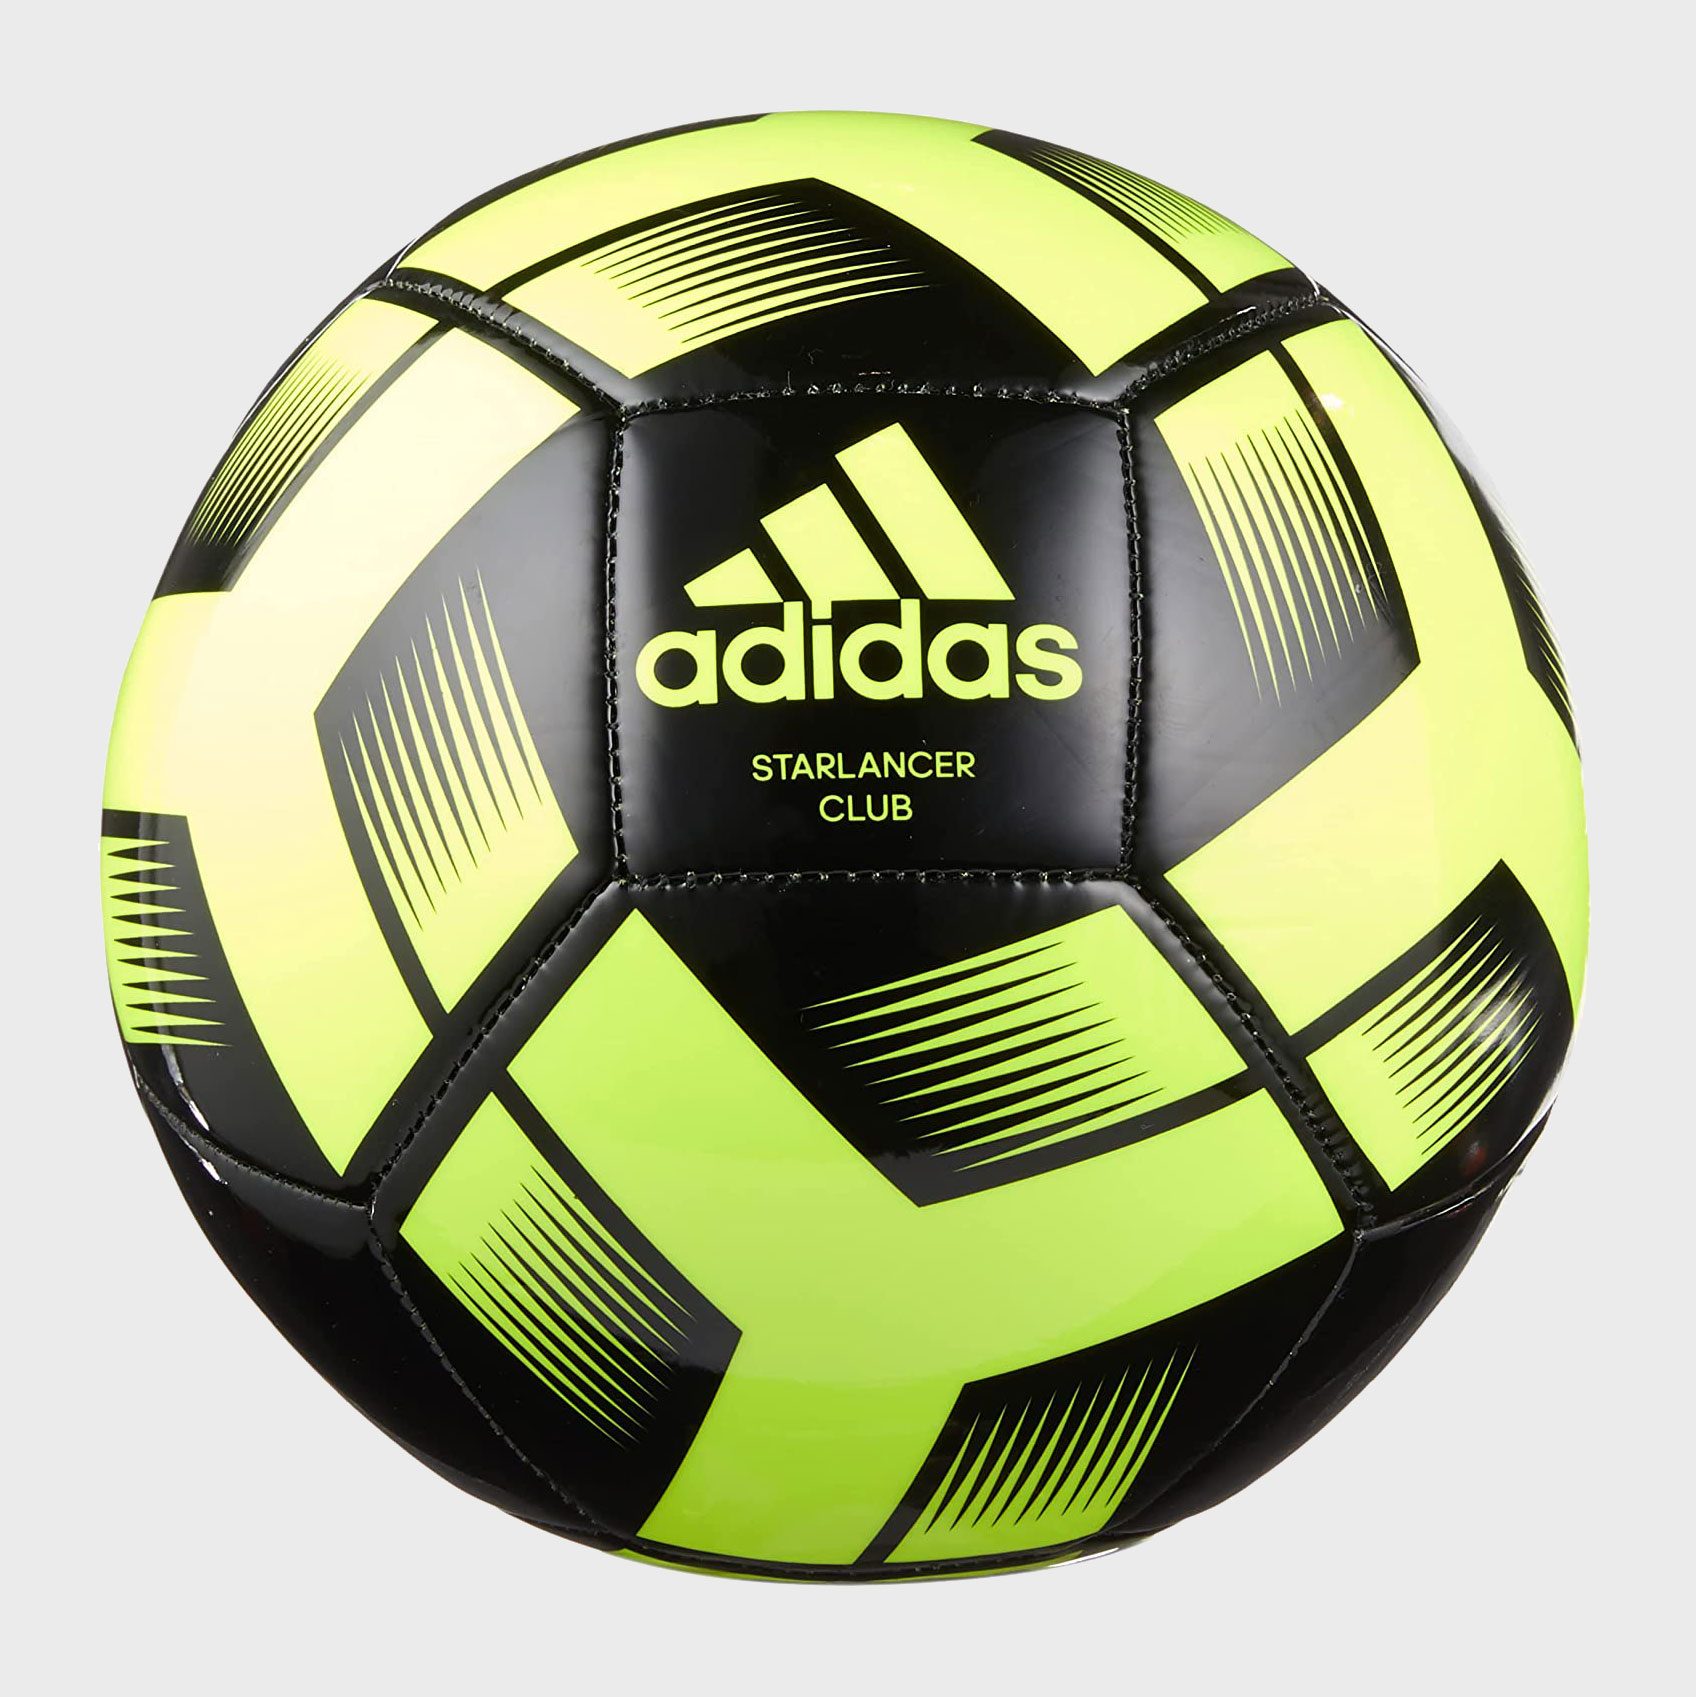 Adidas Starlancer V Club Soccer Ball Ecomm Via Amazon